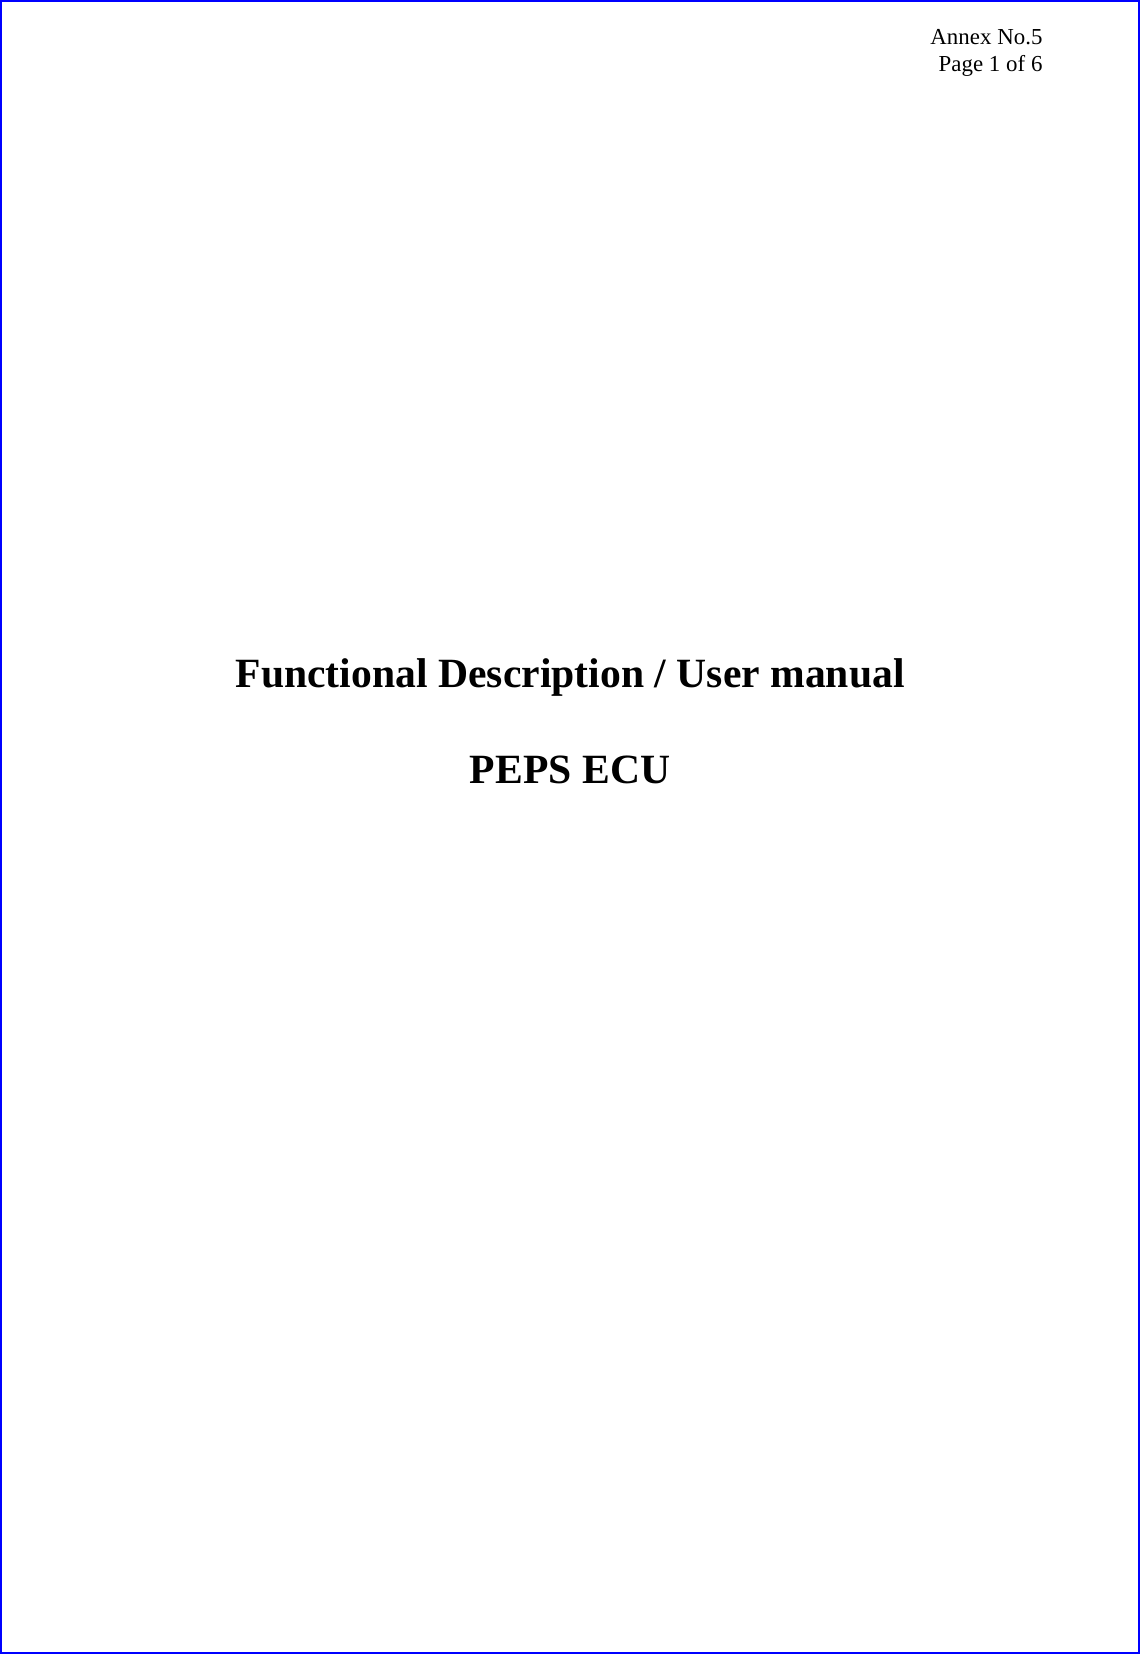 Annex No.5 Page 1 of 6                     Functional Description / User manual  PEPS ECU 